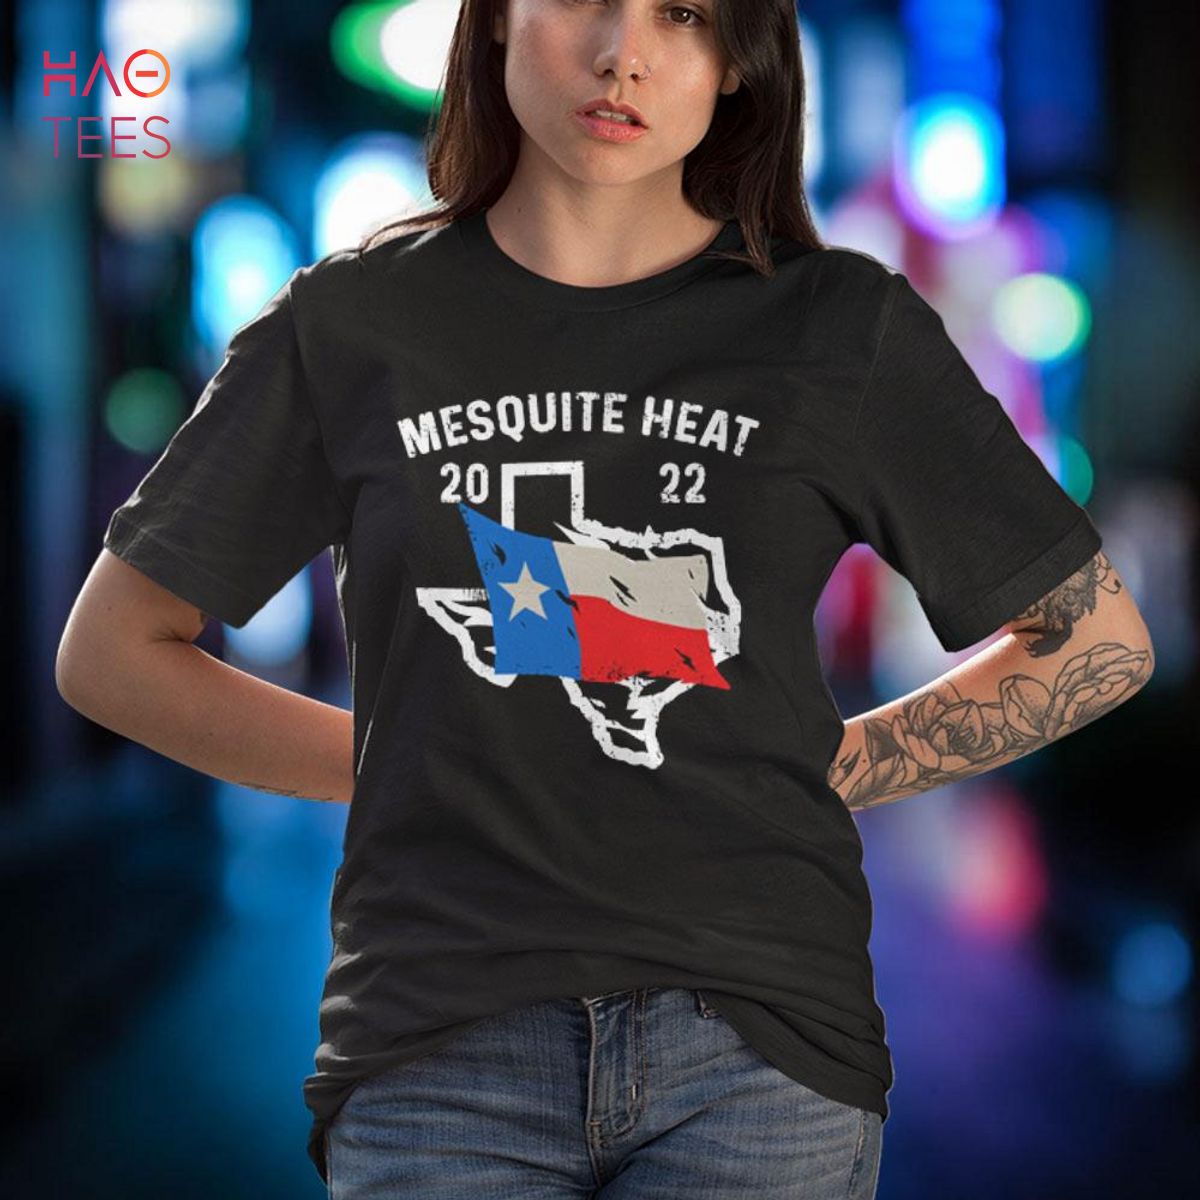 Mesquite Heat Fire 2022 in Abilene Texas Taylor County Shirt